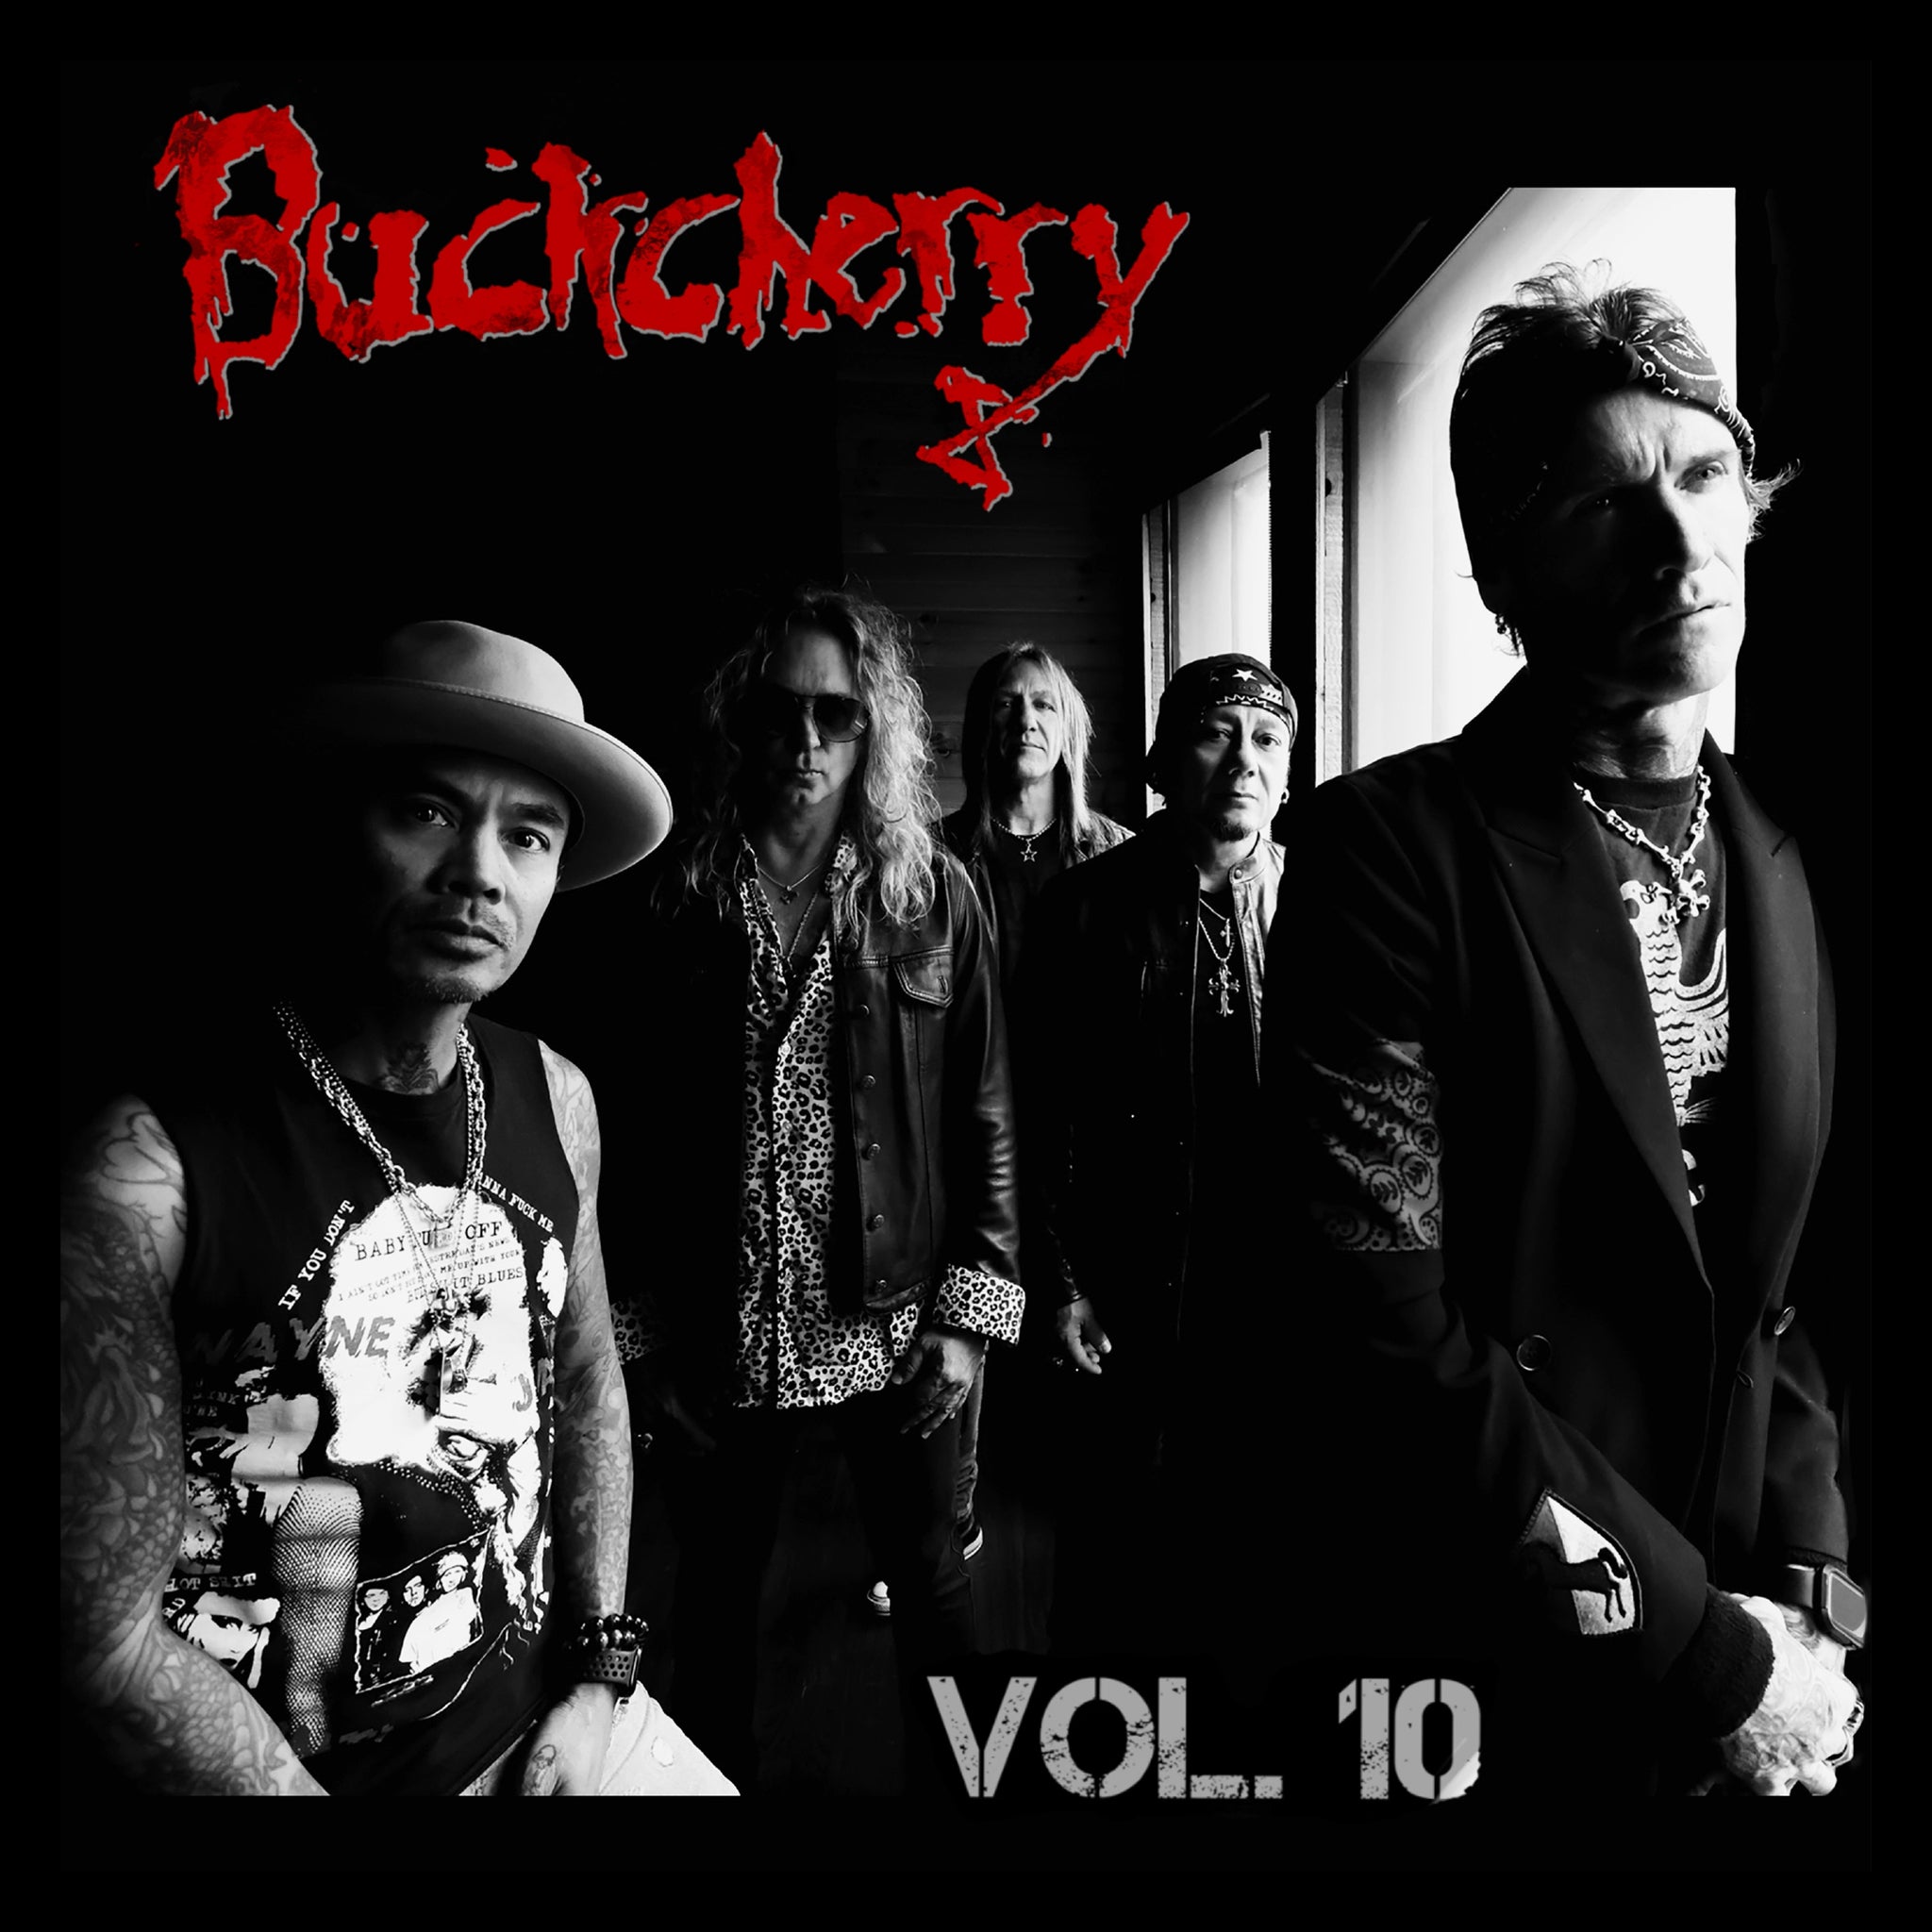 Buckcherry "Vol. 10" Digital Download (MP3 and WAV)